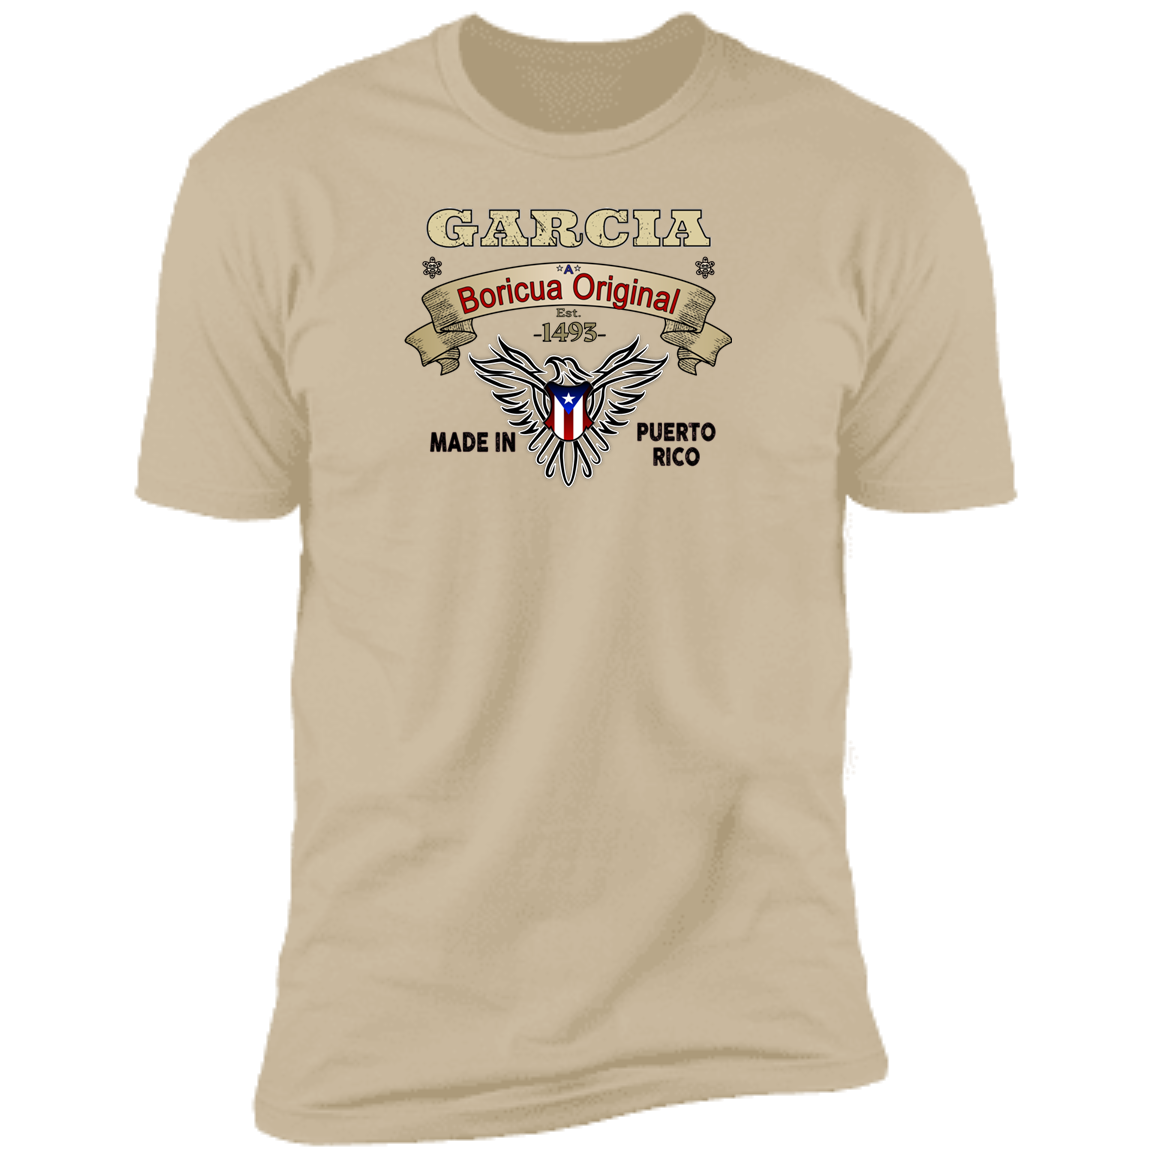 Garcia Boricua Original Premium Short Sleeve T-Shirt - Puerto Rican Pride